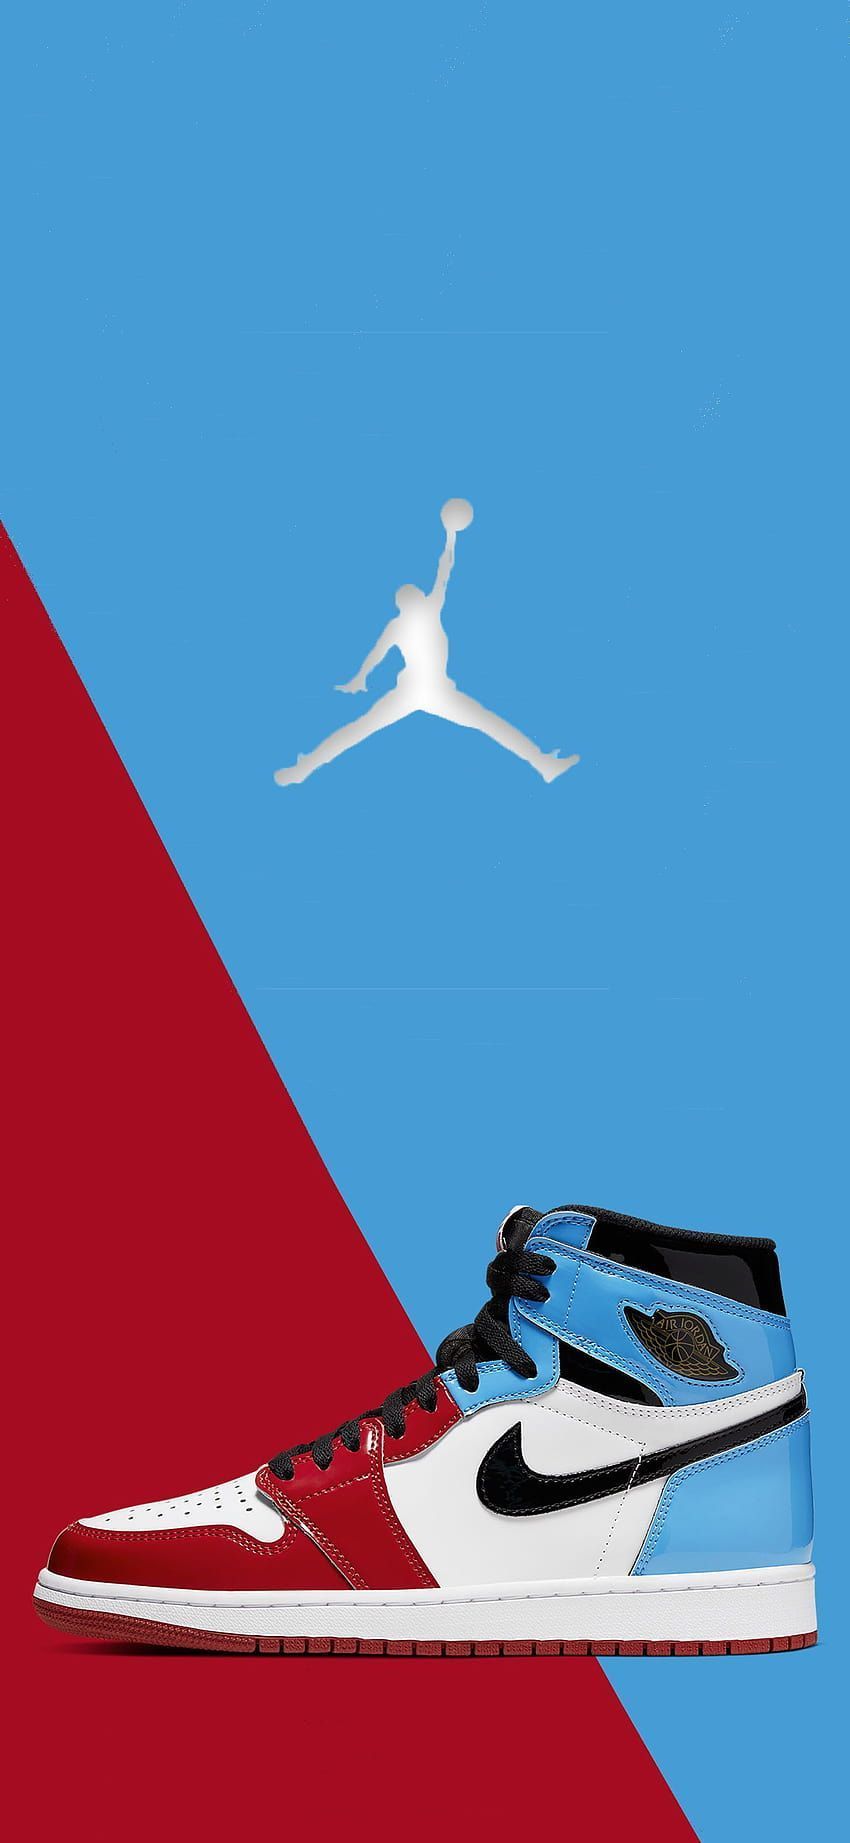 Jordan 1 shoes on a red and blue background - Air Jordan, Air Jordan 1